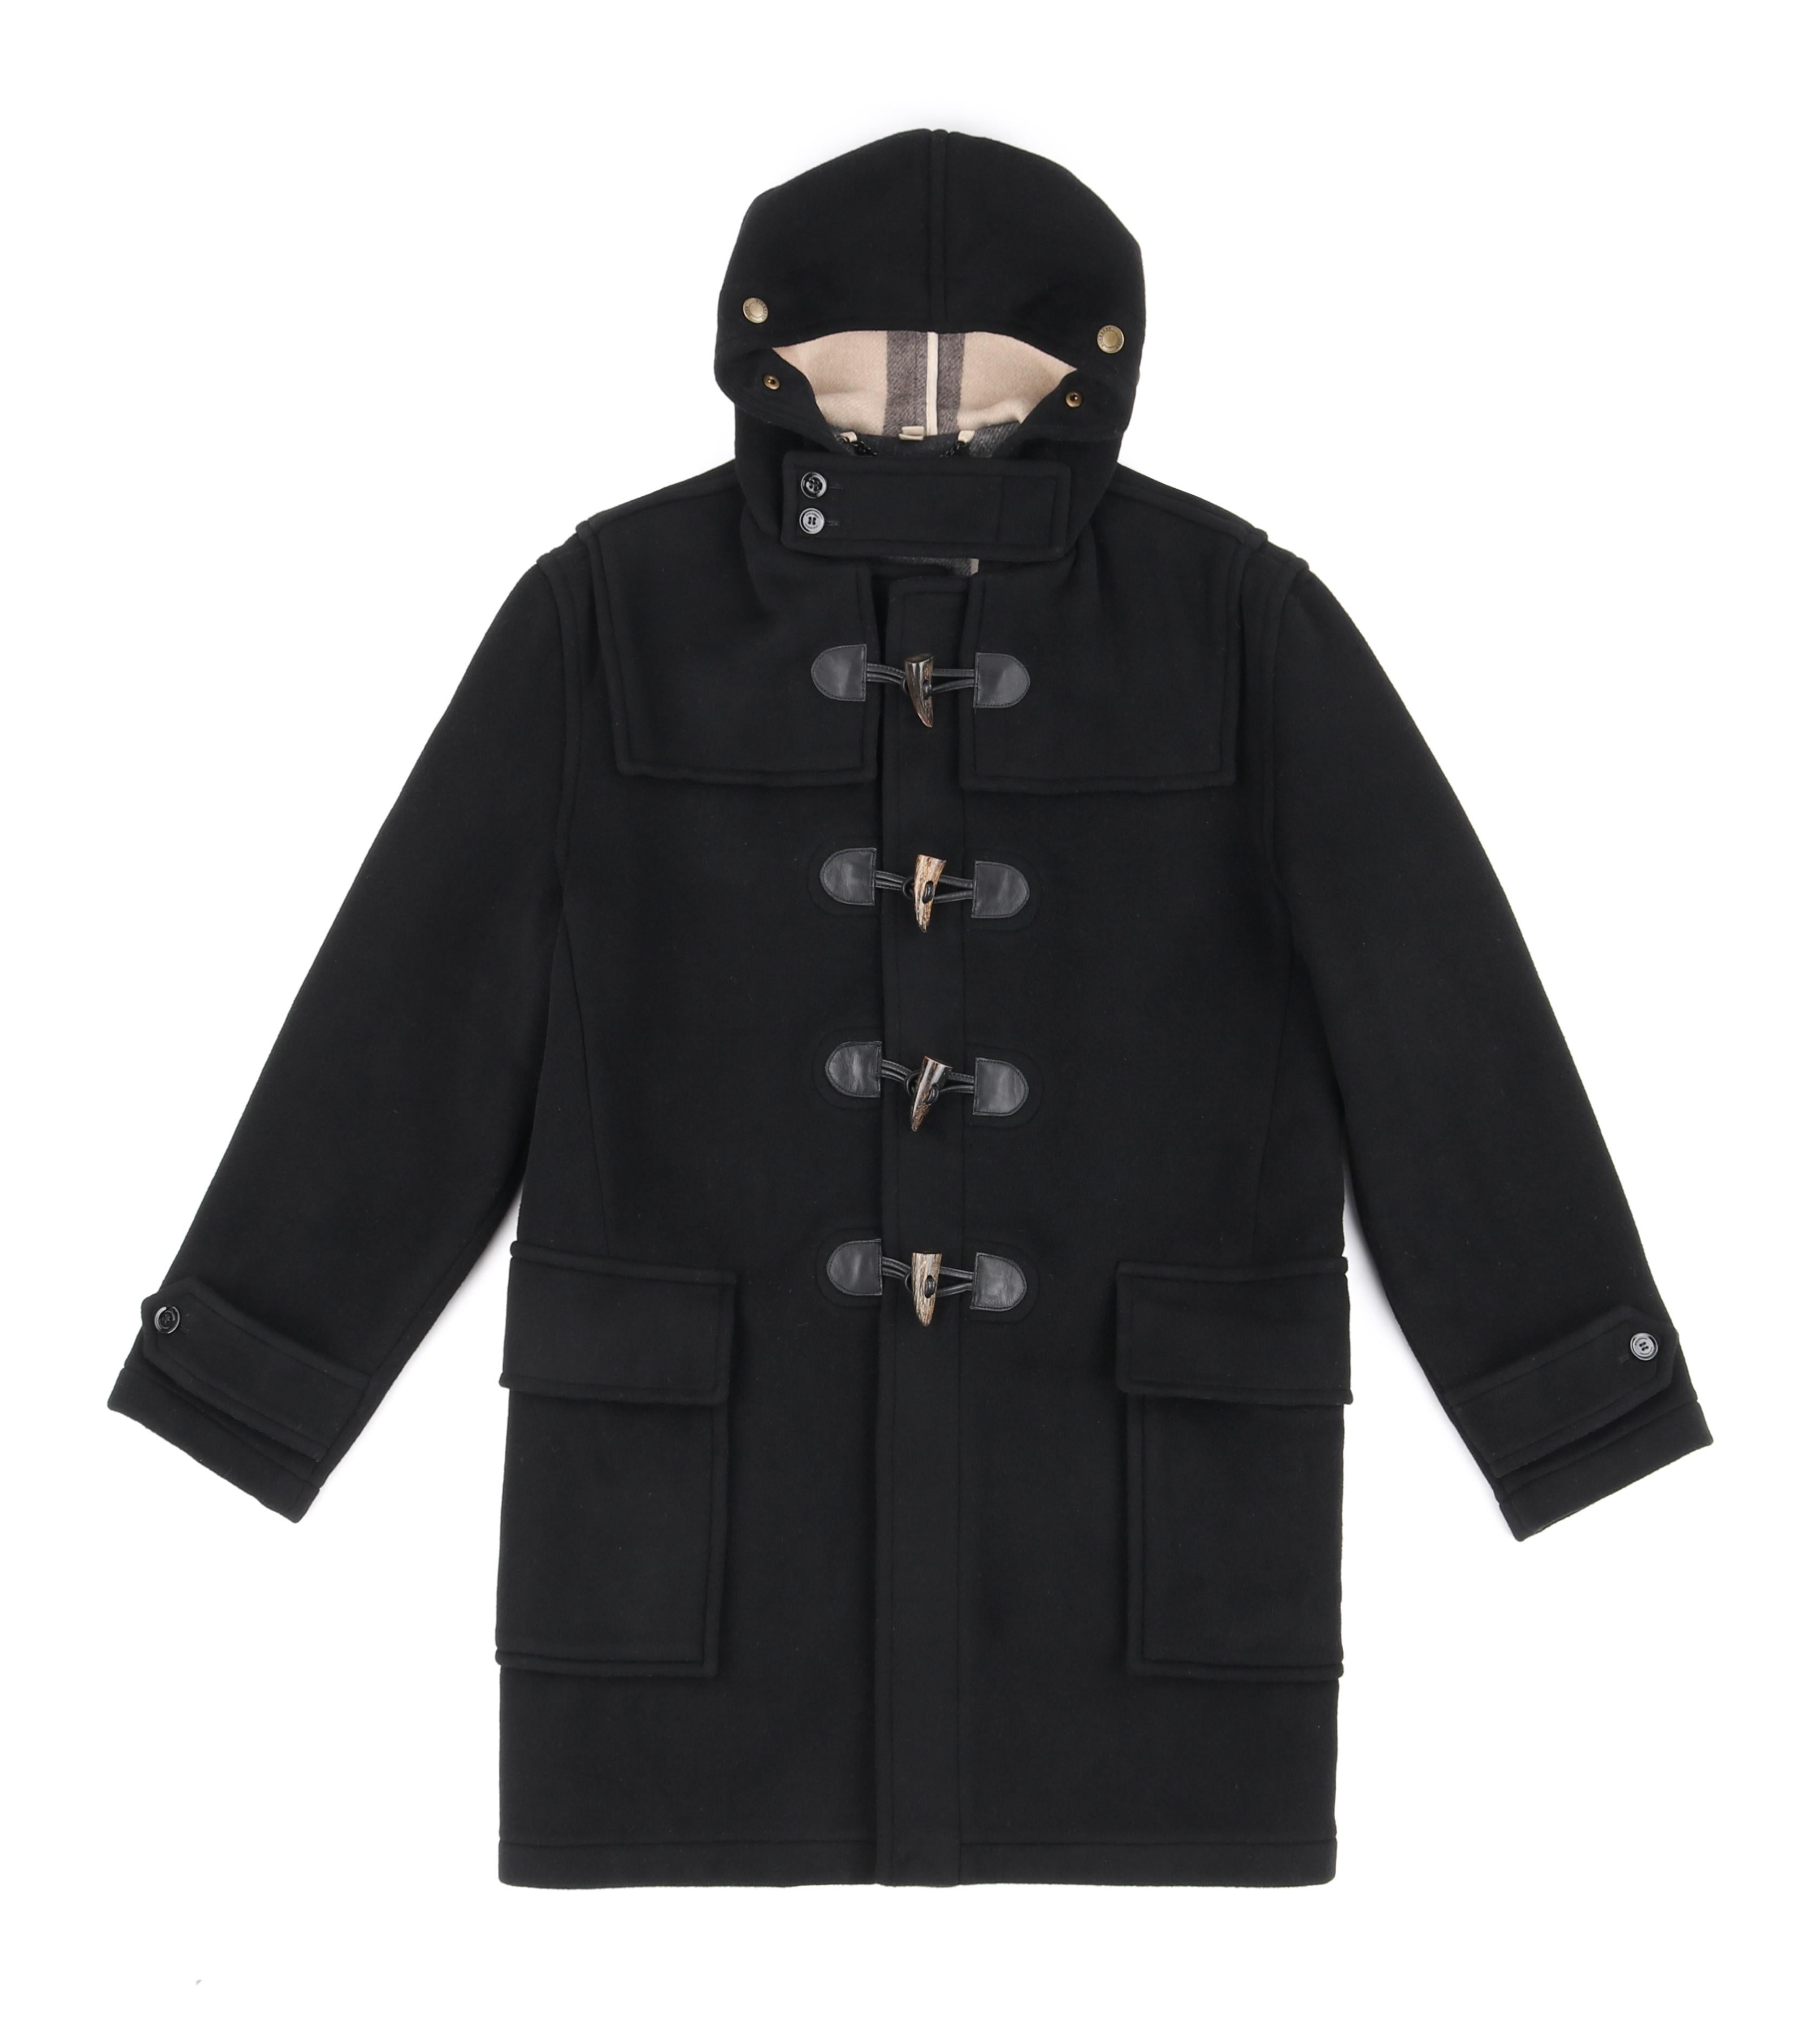 BURBERRY Brit A/W 2013 “Broadhurst” Men's Black Toggle Hooded Duffle Coat Jacket

Brand / Manufacturer: Burberry 
Collection: F/W 2013
Designer: Christopher Bailey
Manufacturer Style Name: “Broadhurst” Duffle Coat
Style: Duffle coat 
Color(s): Black